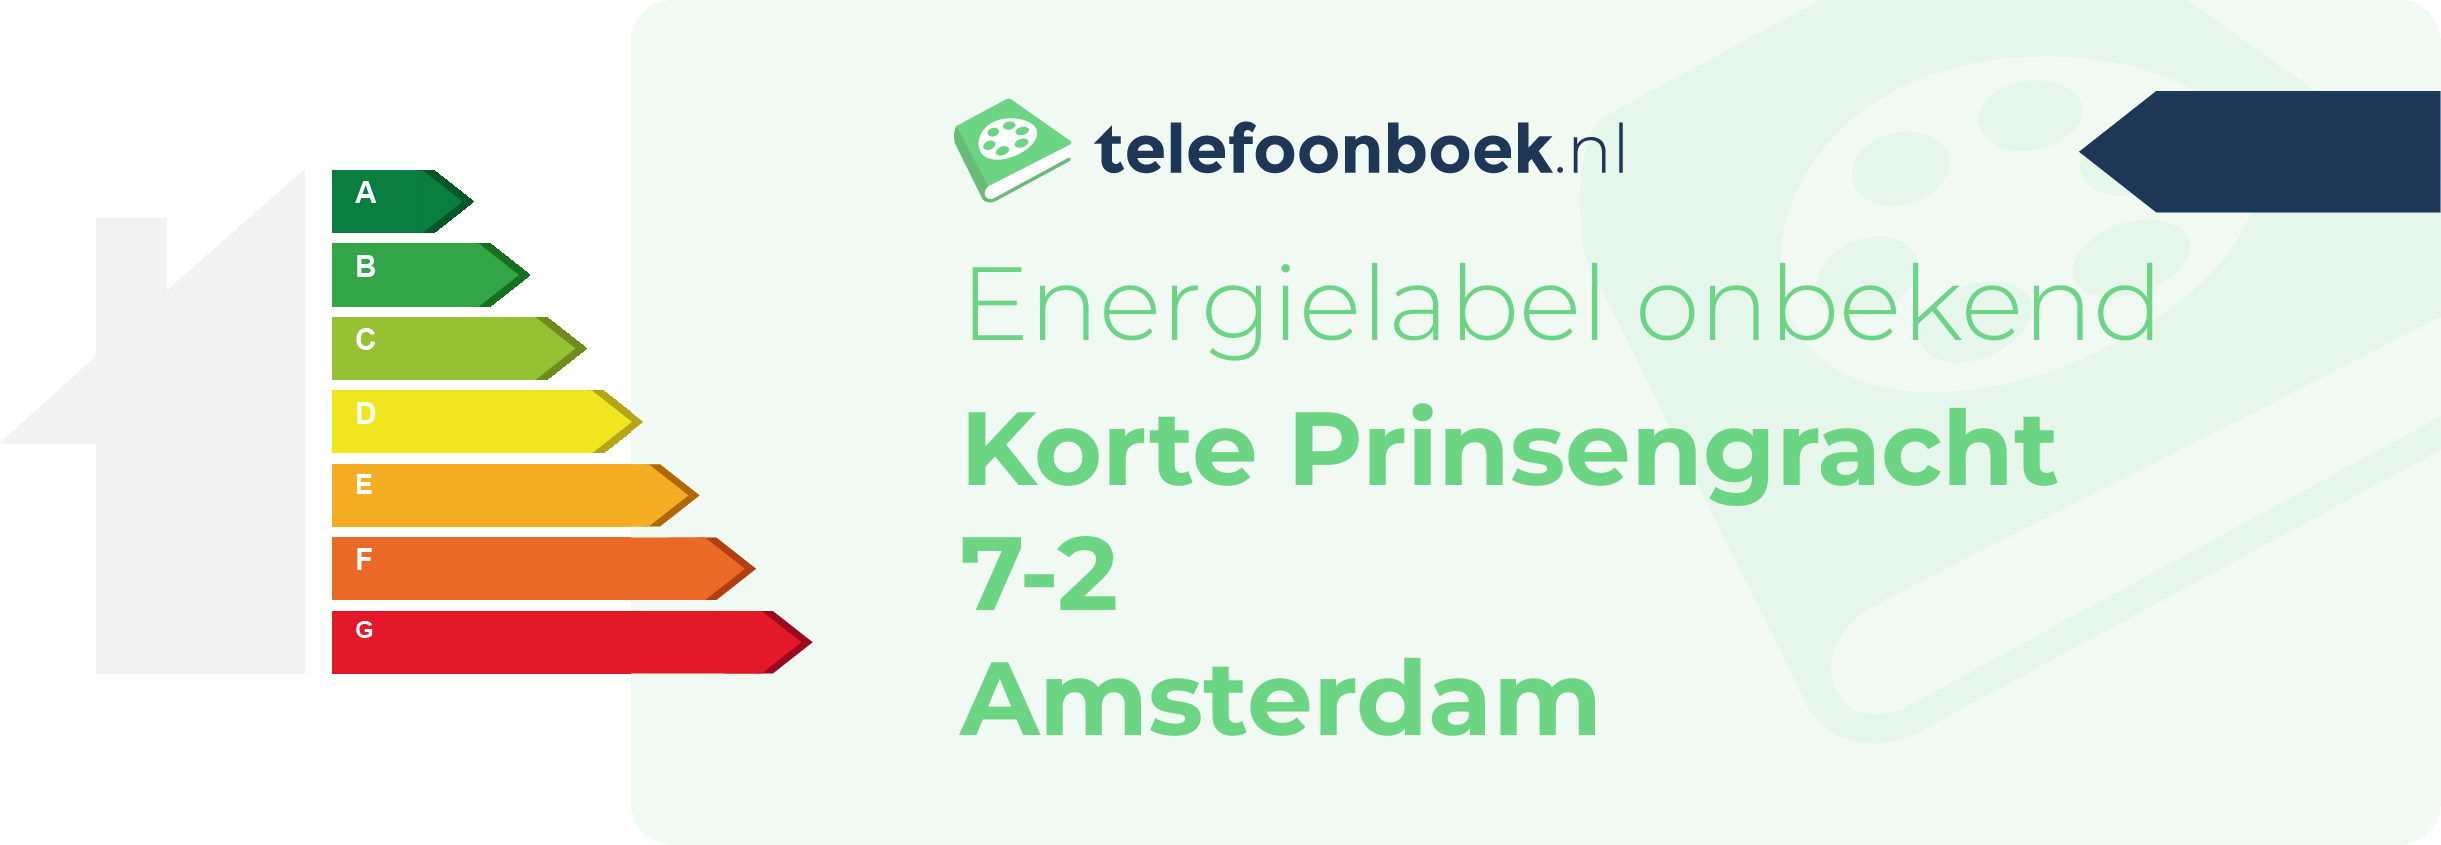 Energielabel Korte Prinsengracht 7-2 Amsterdam